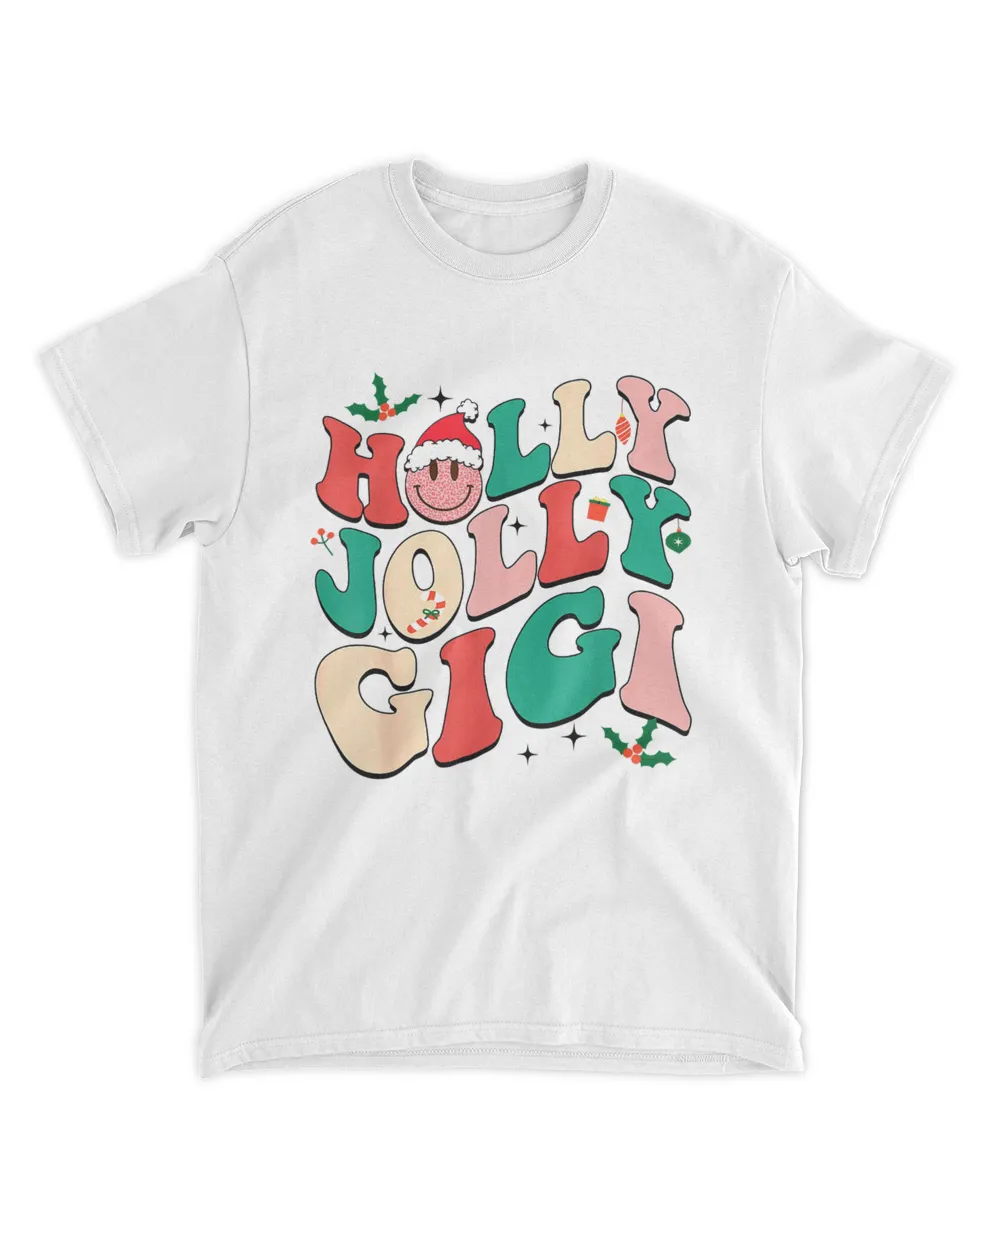 Jolly Gigi Holly Gigi Xmas Matching Family Christmas T-Shirt